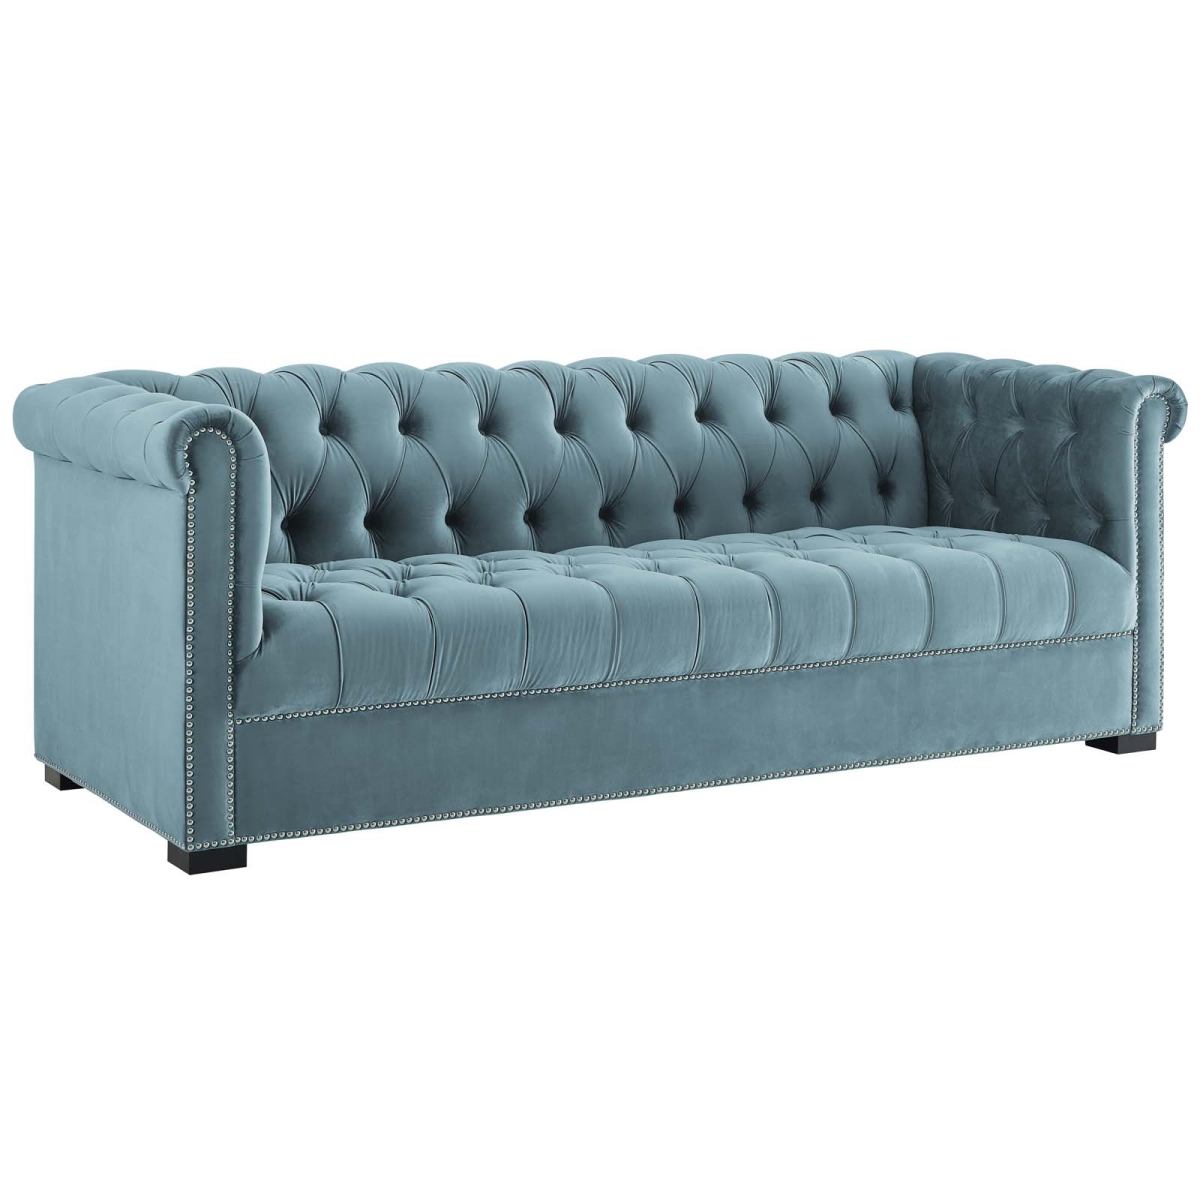 Eei-3064-sea Heritage Upholstered Velvet Sofa - Sea Blue, 30.5 X 86 X 35 In.